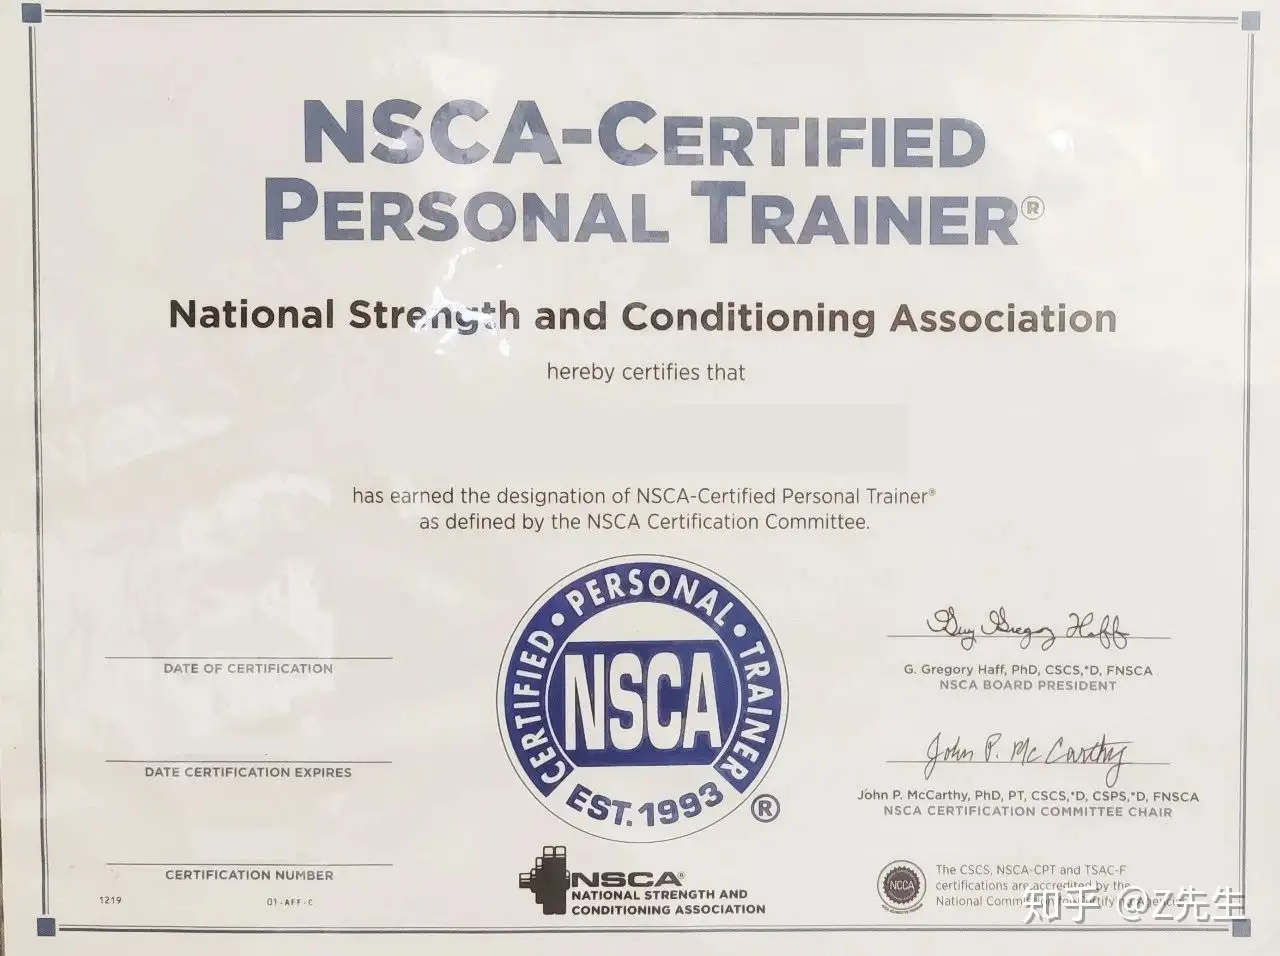 NSCA-CSCS 教科書-